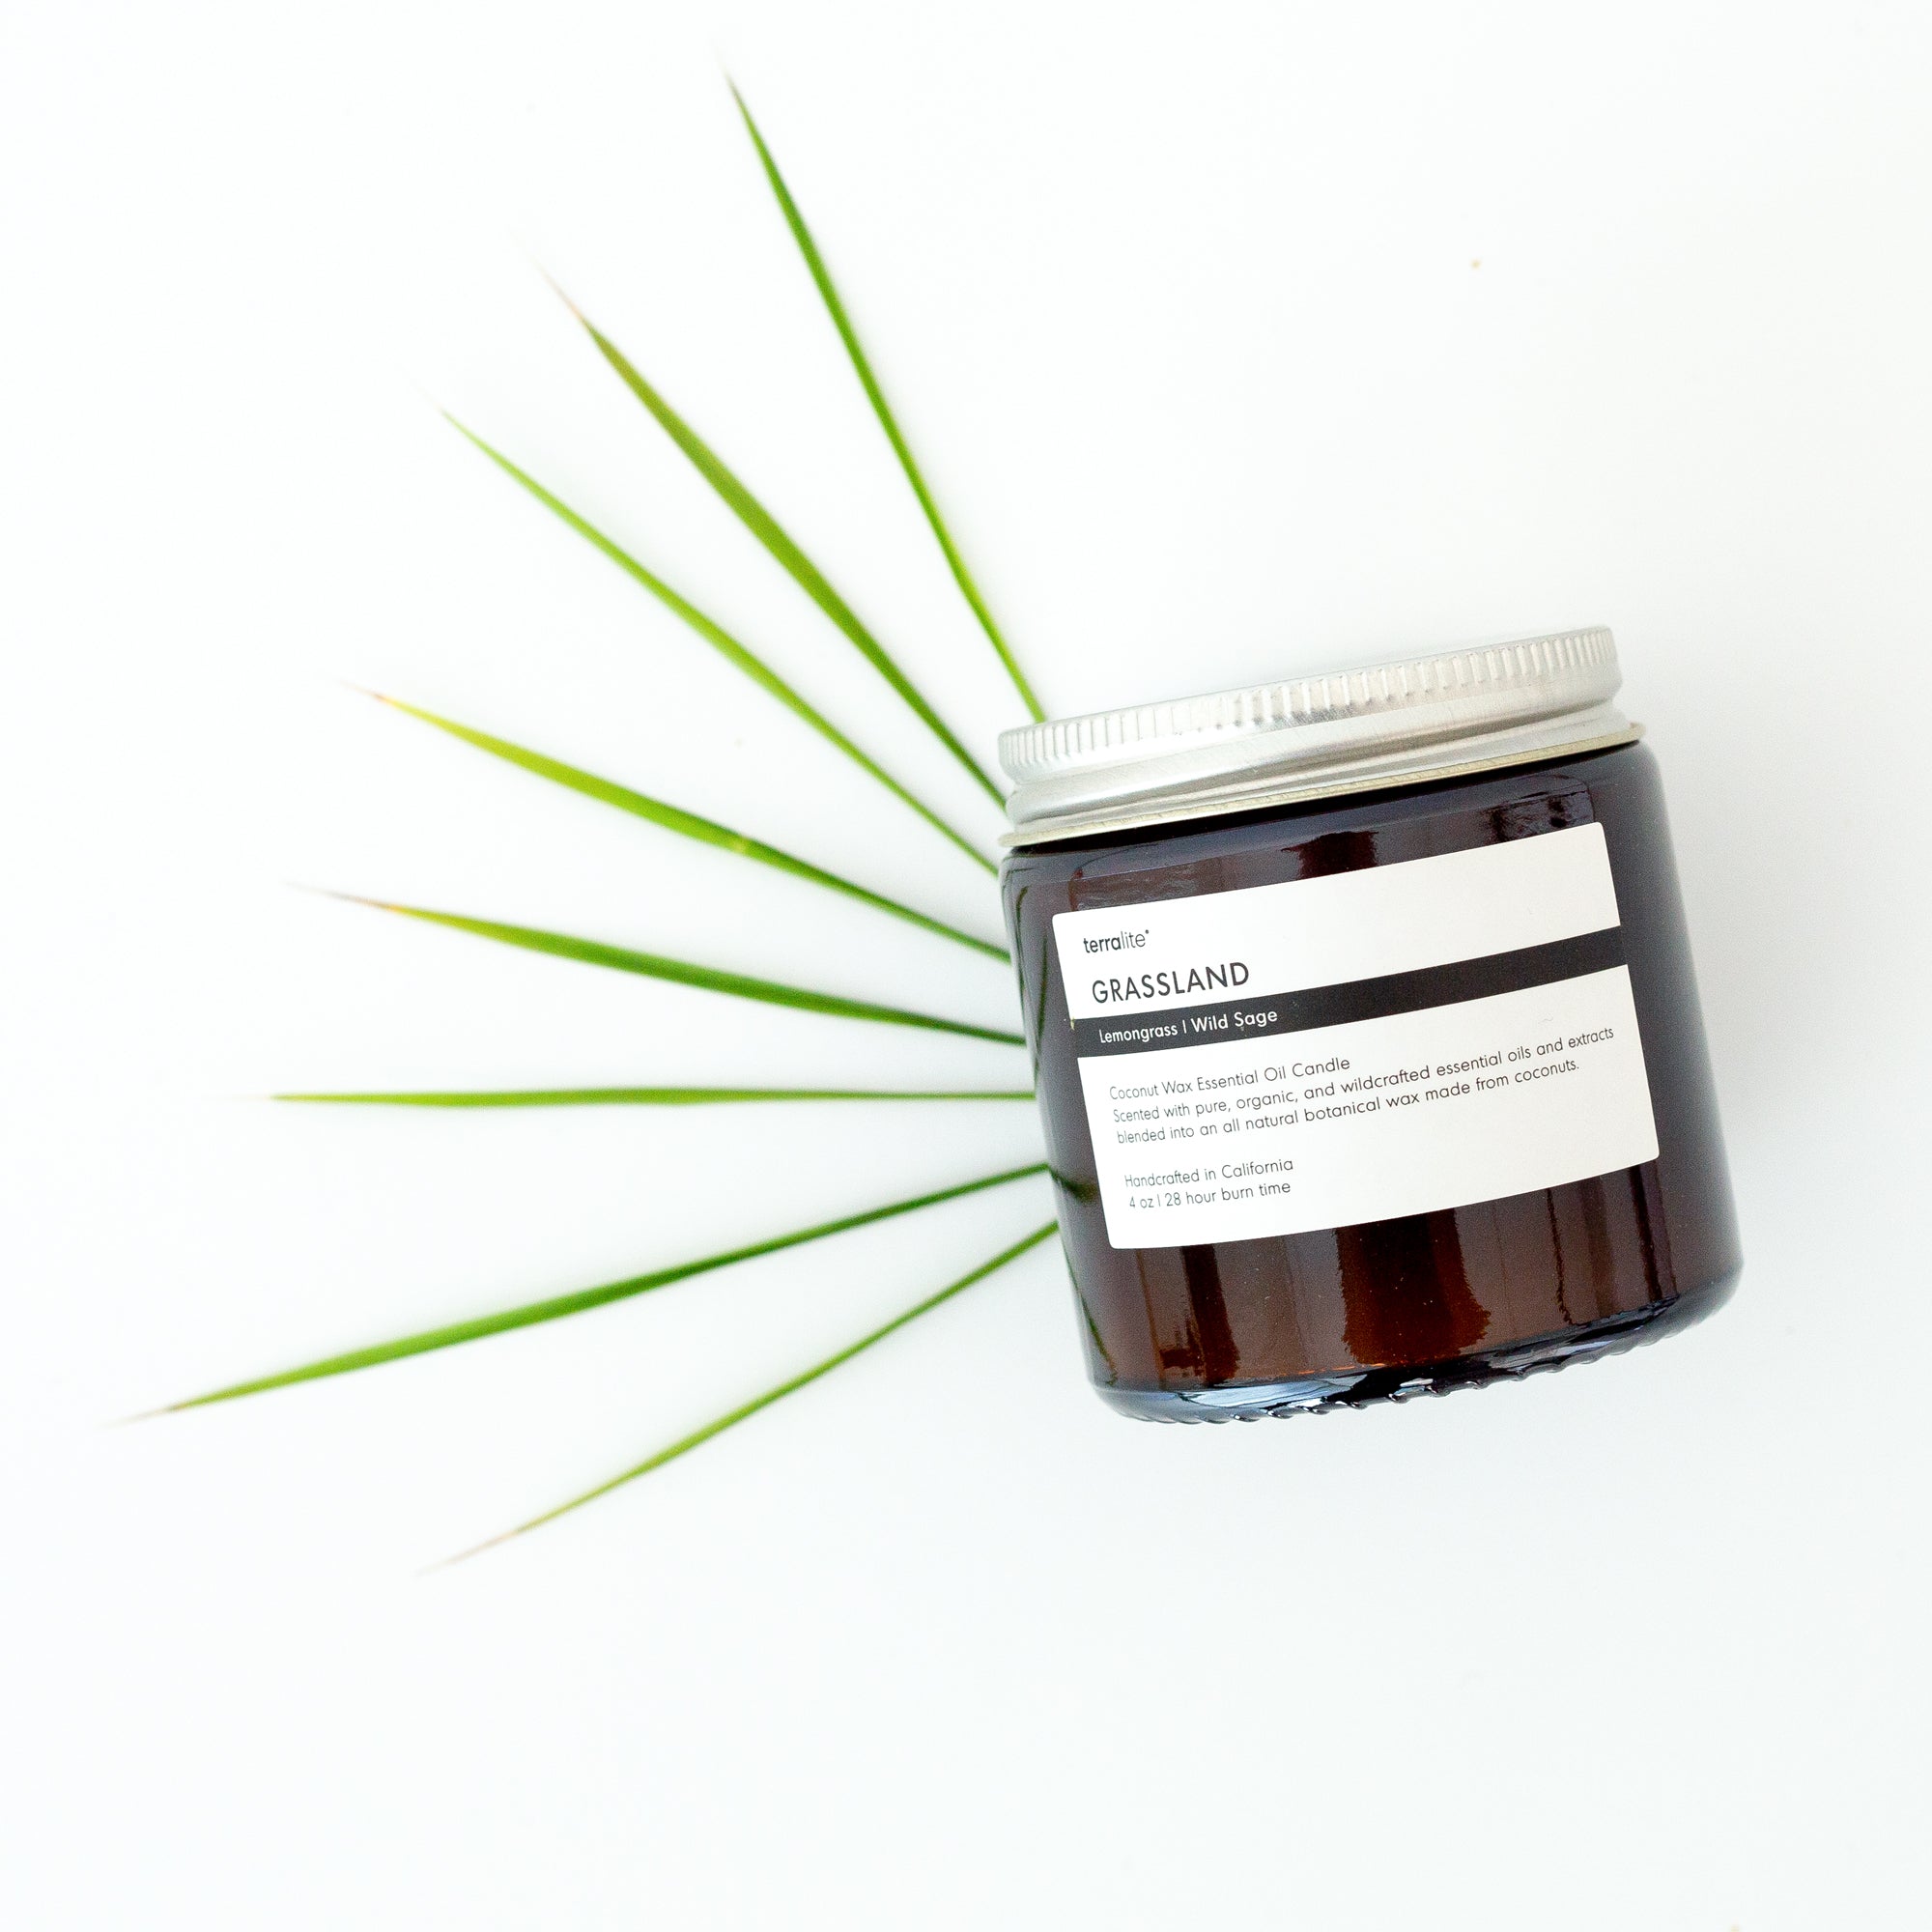 Grassland Essential Oil Candle - 4 oz. made with organic lemongrass and wild sage essential oils